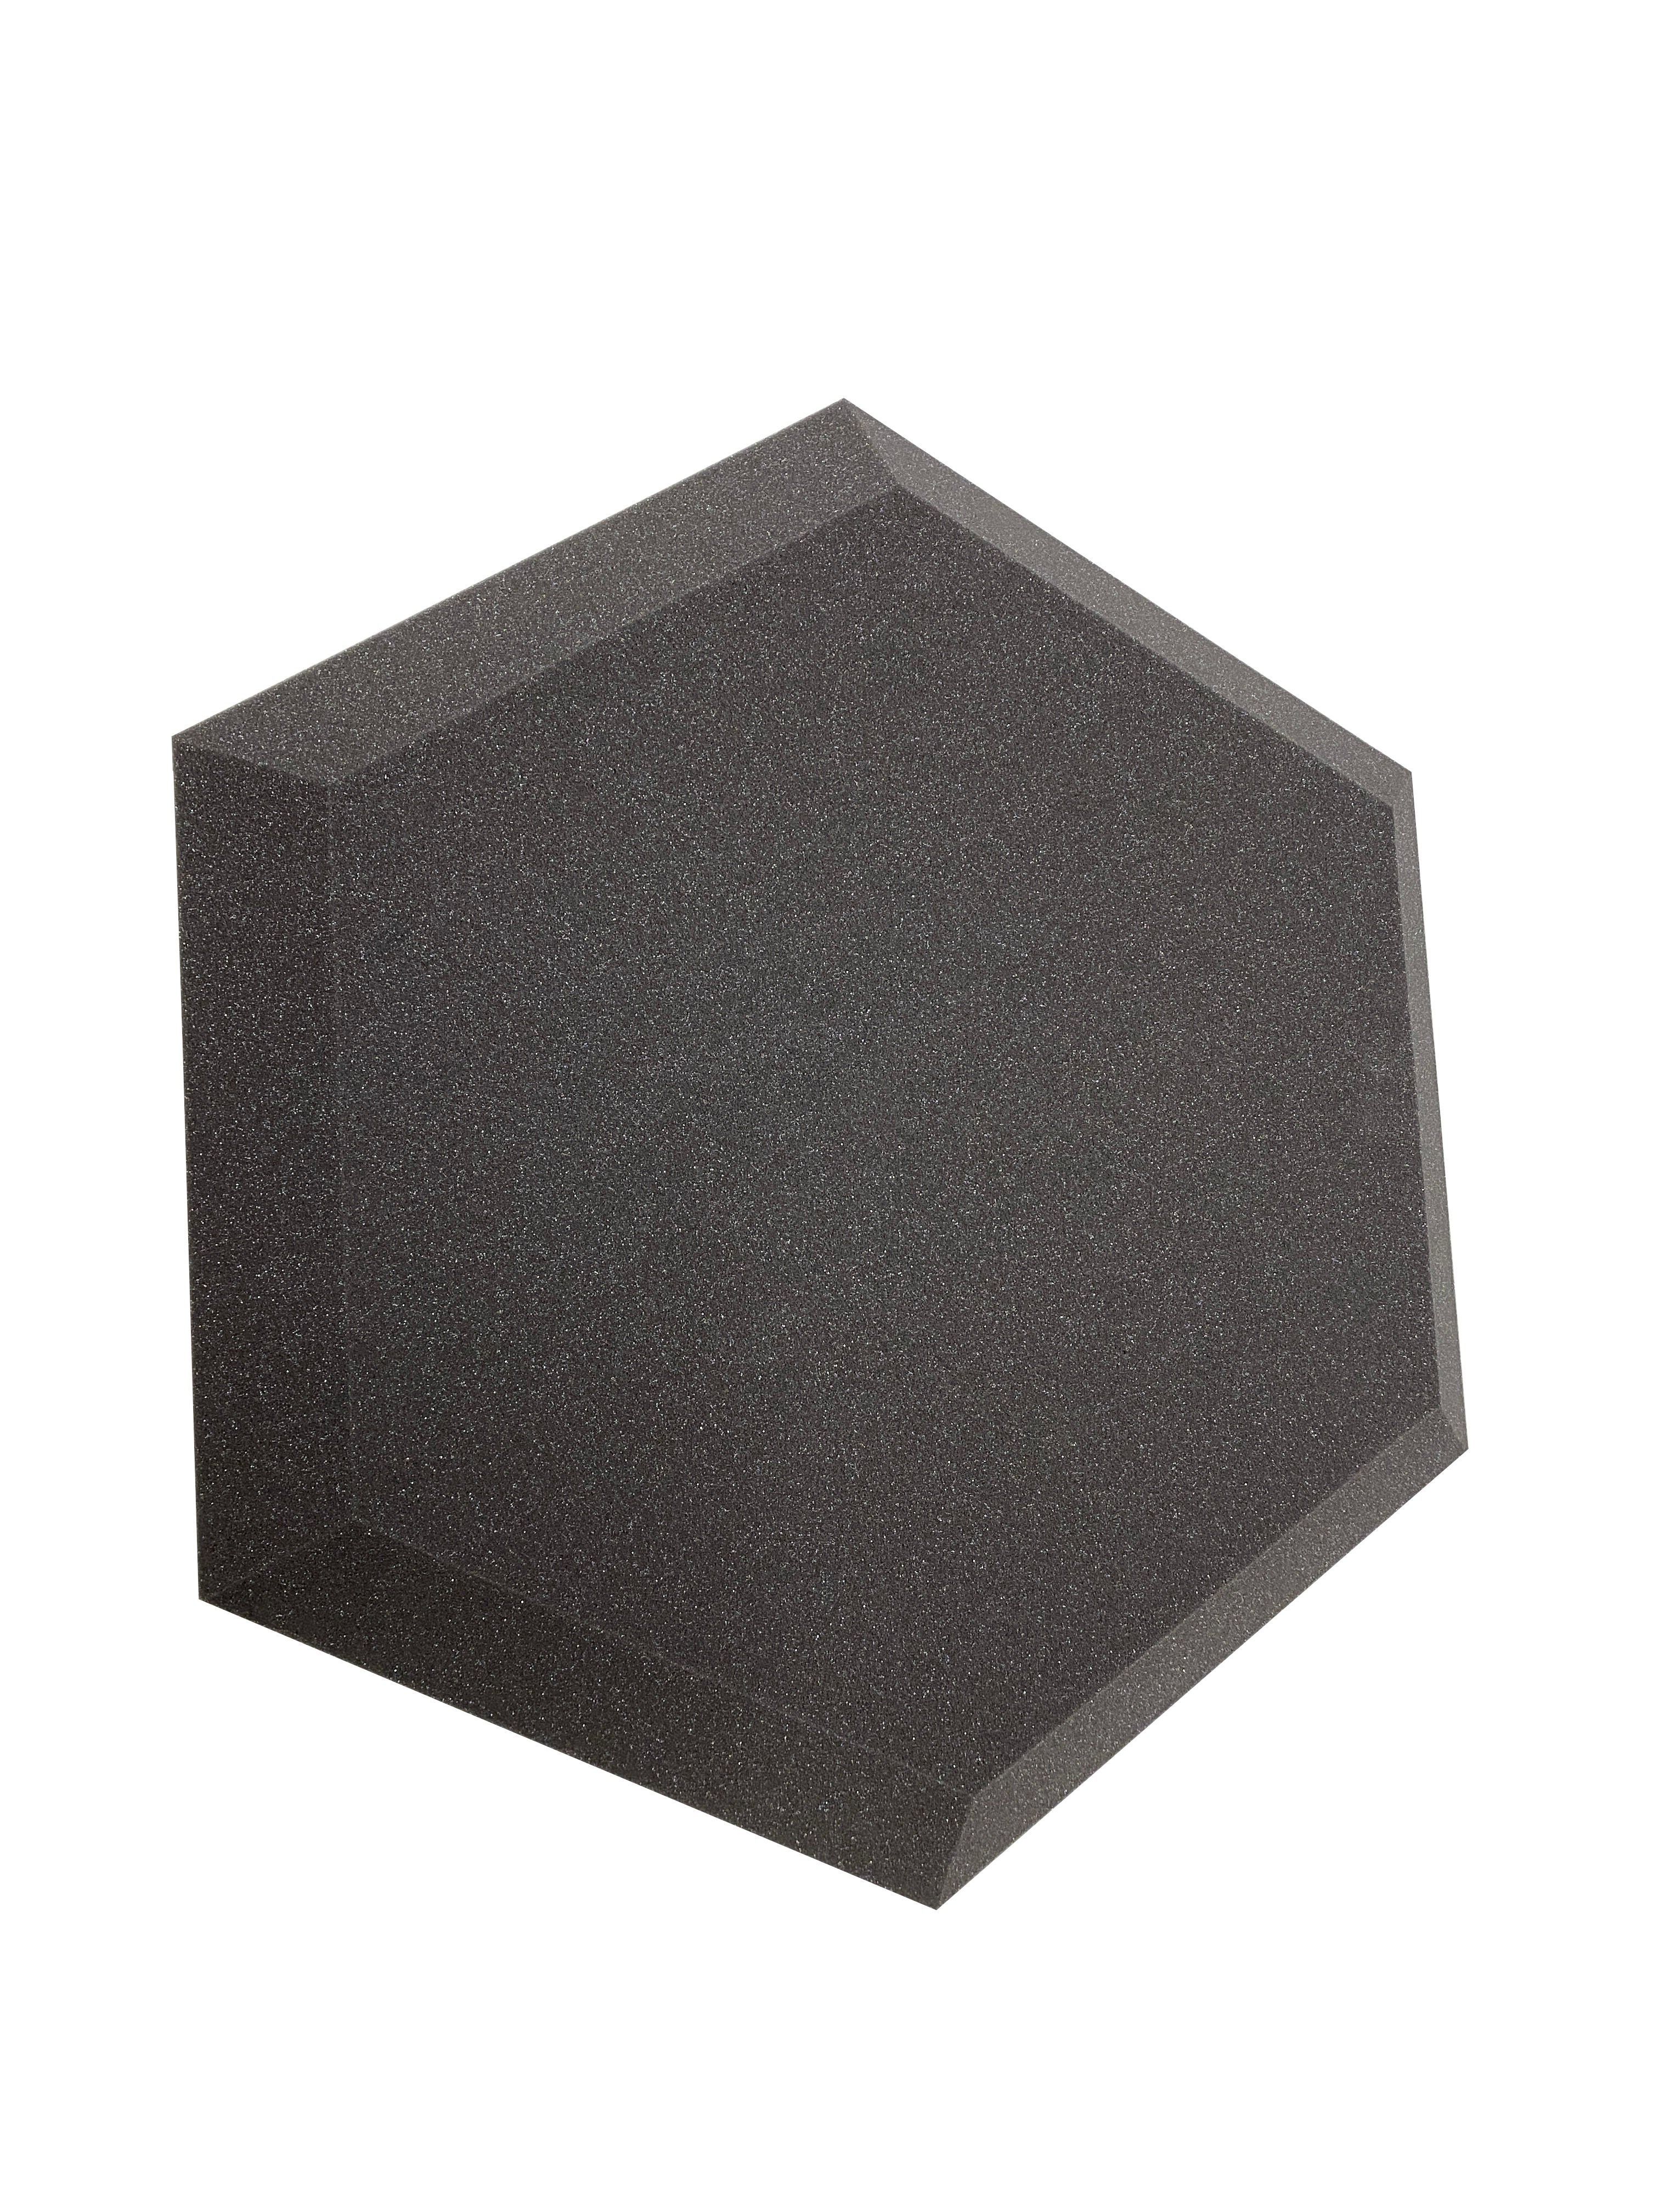 Hexatile3 Acoustic Studio Foam Tile Pack